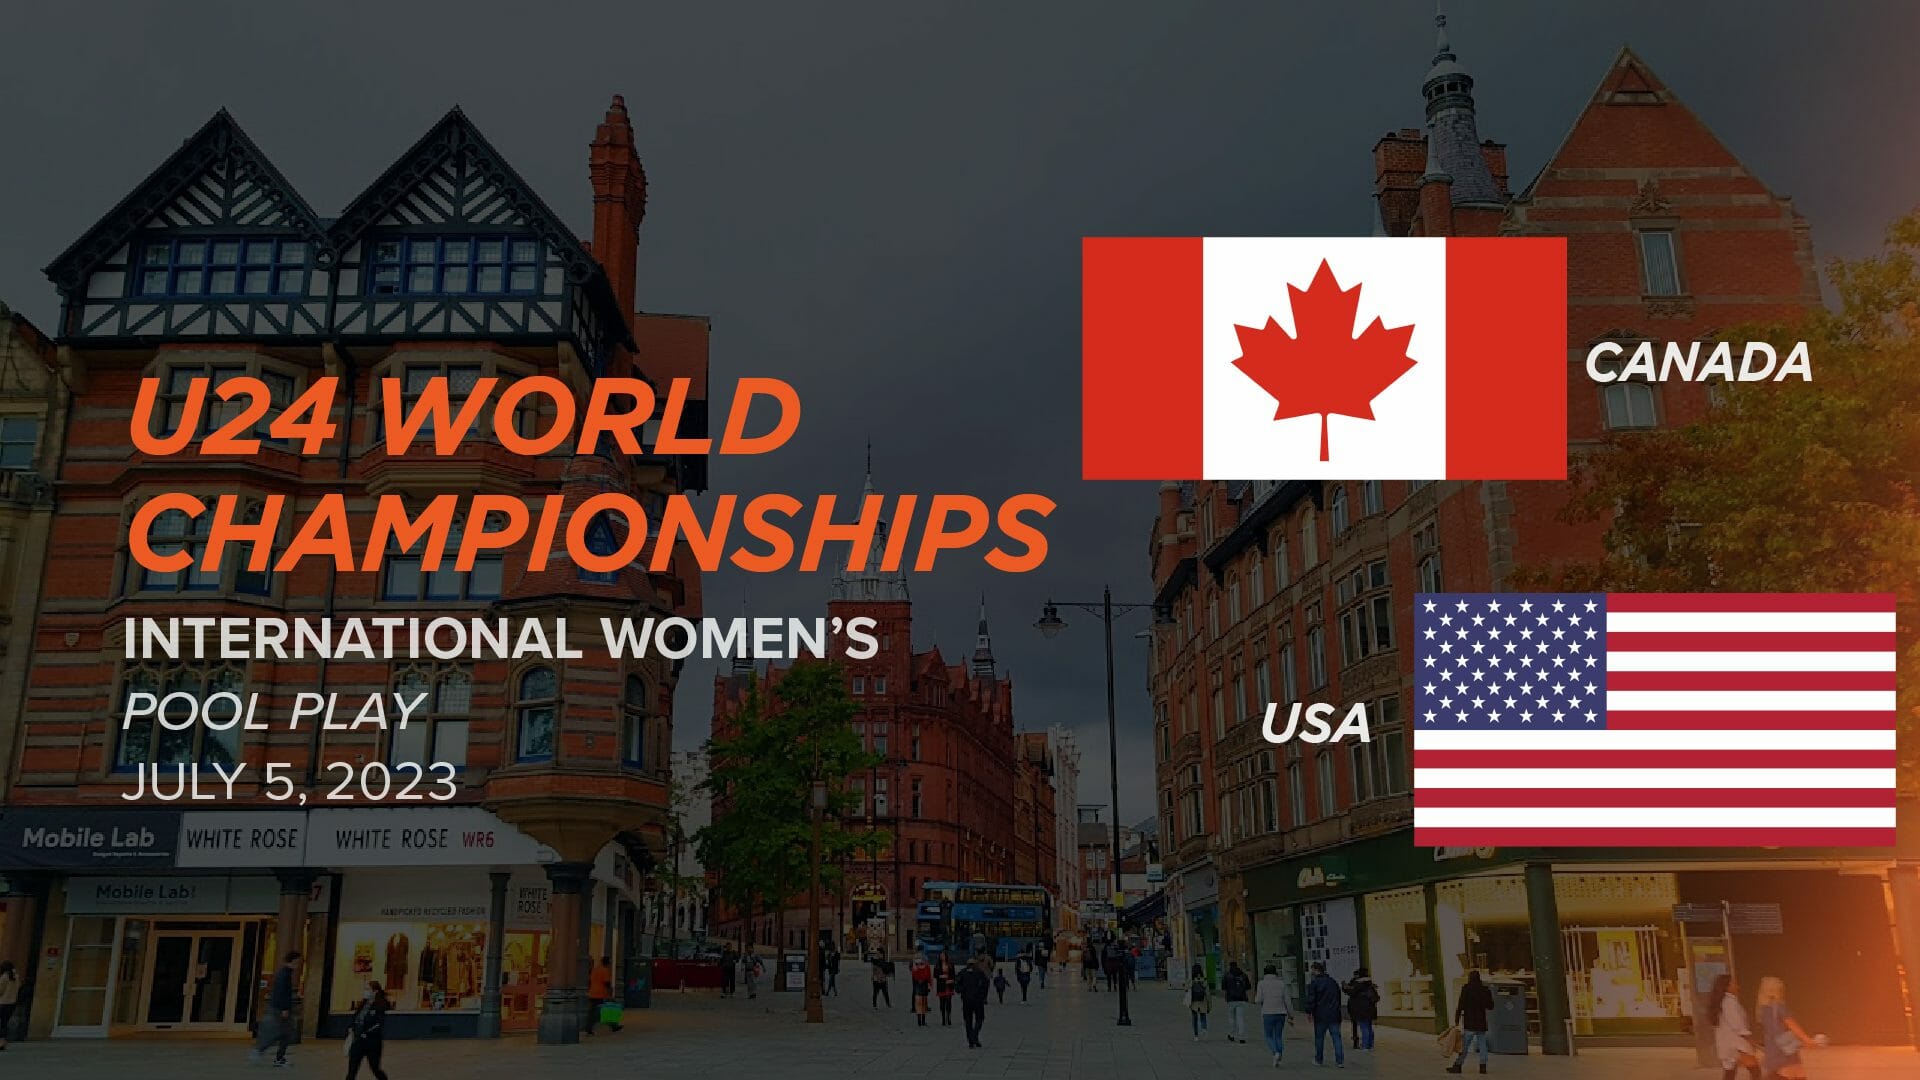 WFDF World Under 24 Ultimate Championship: Women's Final - Canada vs USA 